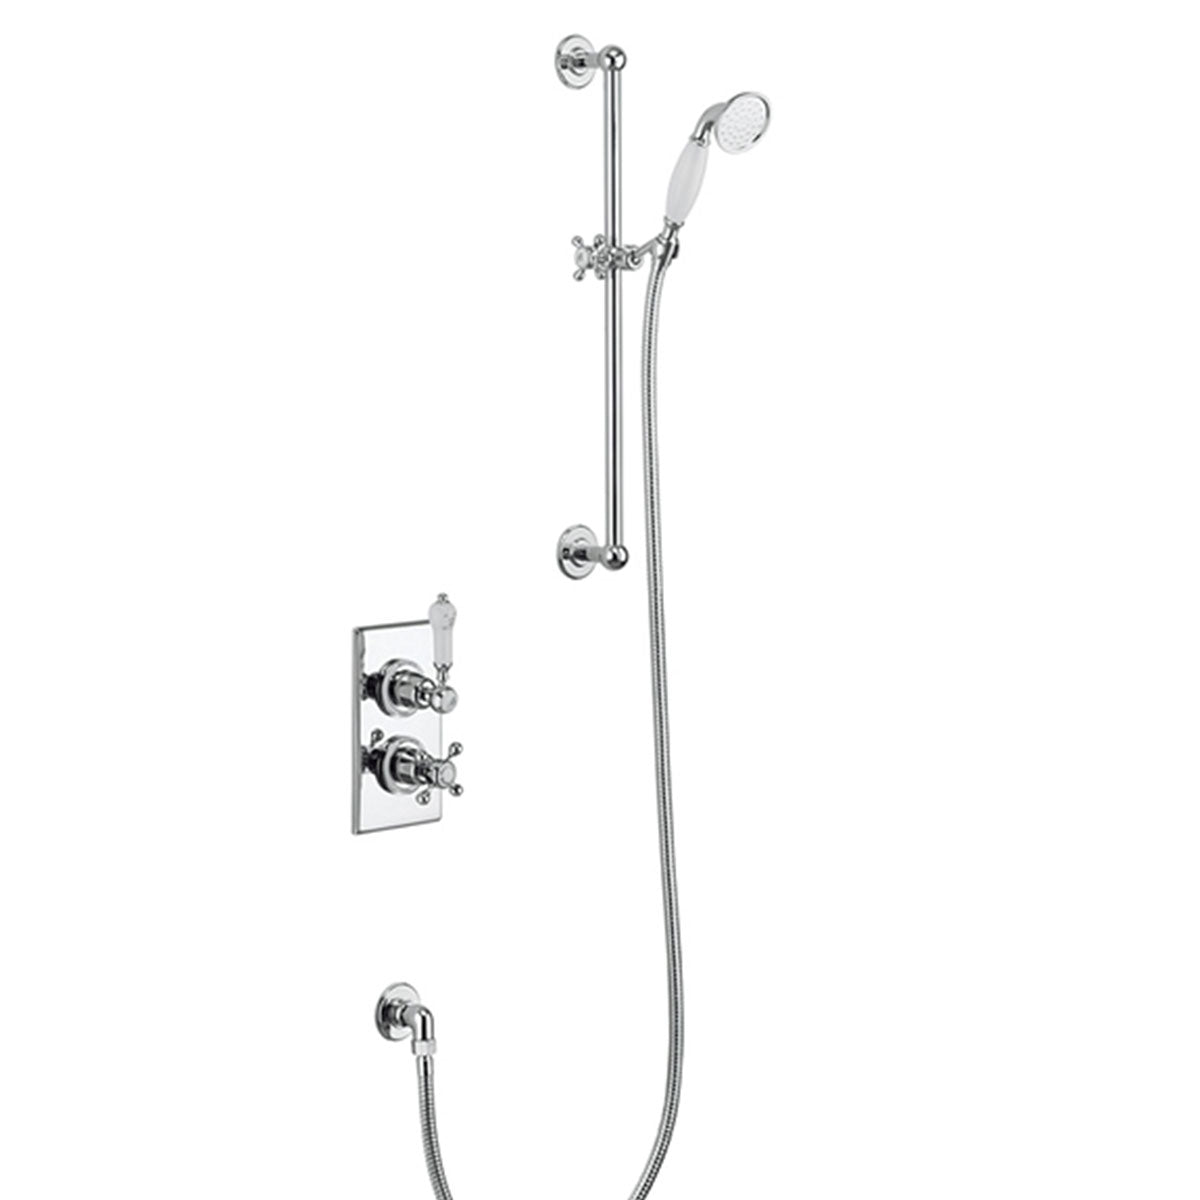 Burlington Trent Thermostatic Single Outlet Shower Valve with Slide Rail Handset Deluxe Bathrooms UK